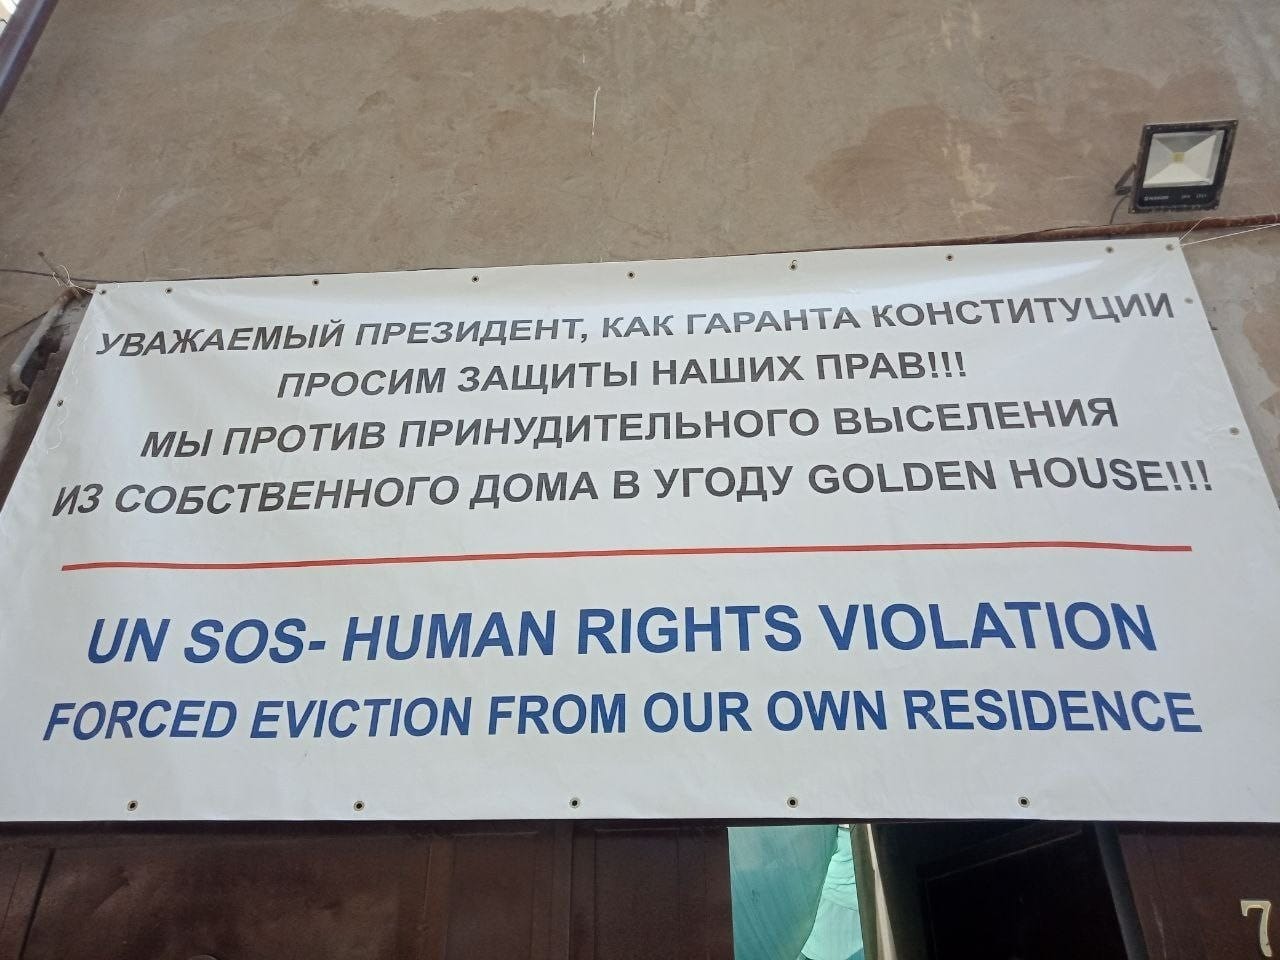 Protest sign in front of Dilmurod Mirusmanov's house in Tashkent, Uzbekistan.